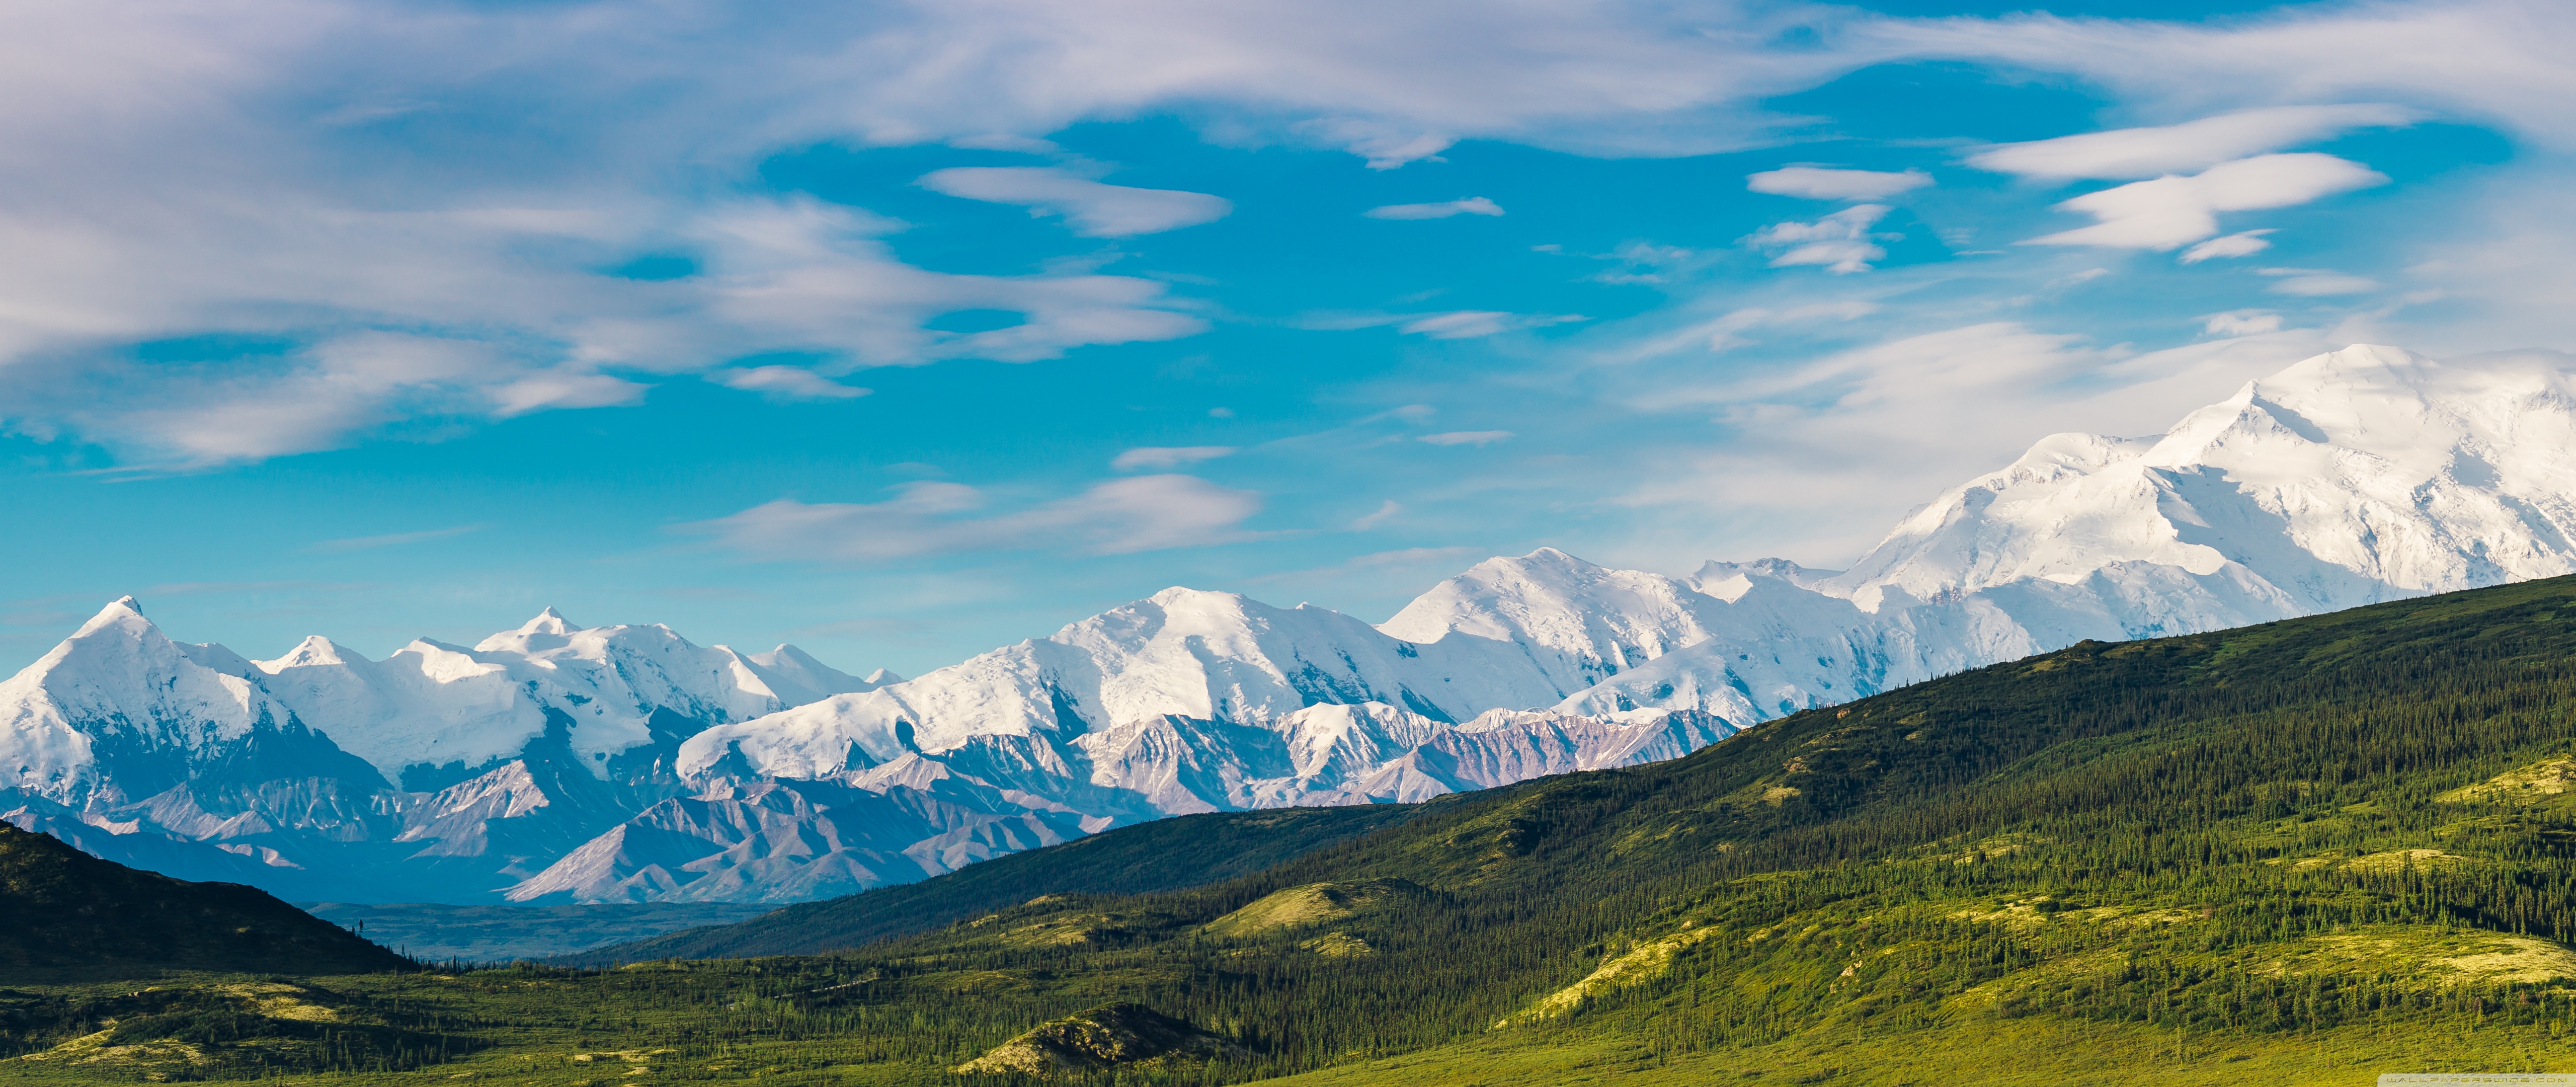 Denali National Park And Preserve Alaska Range United States